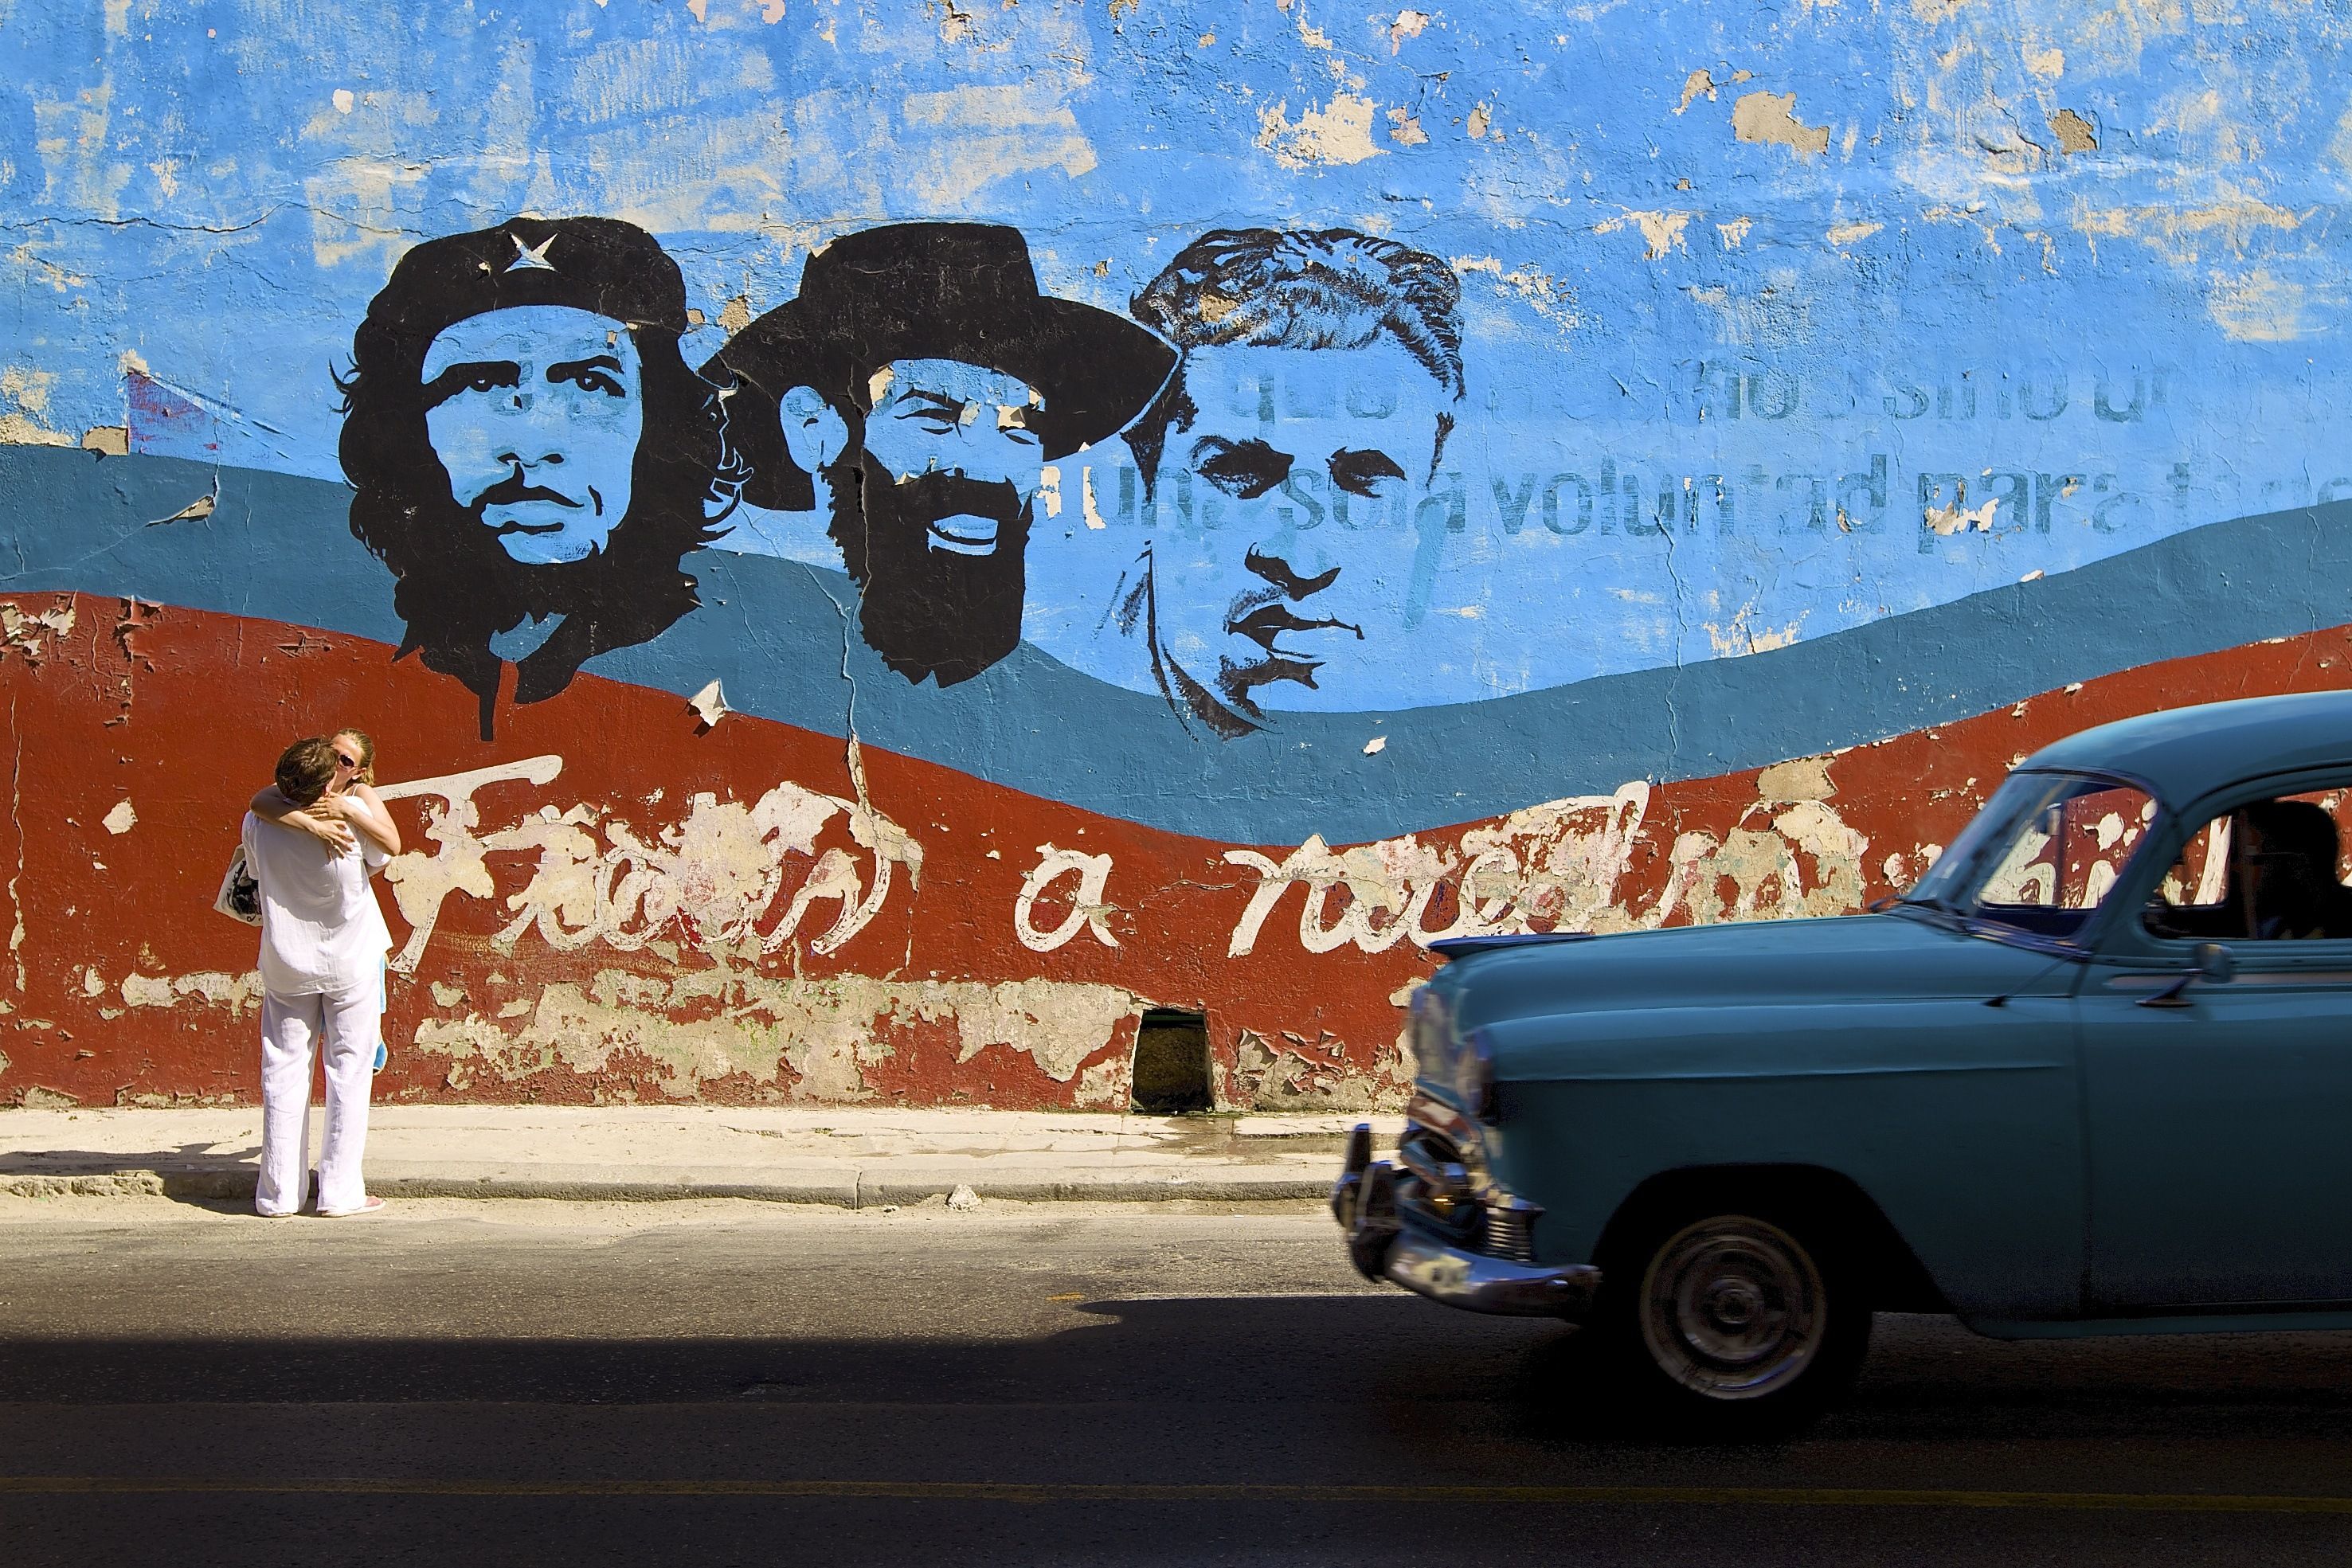 Cuba Wallpaper High Quality